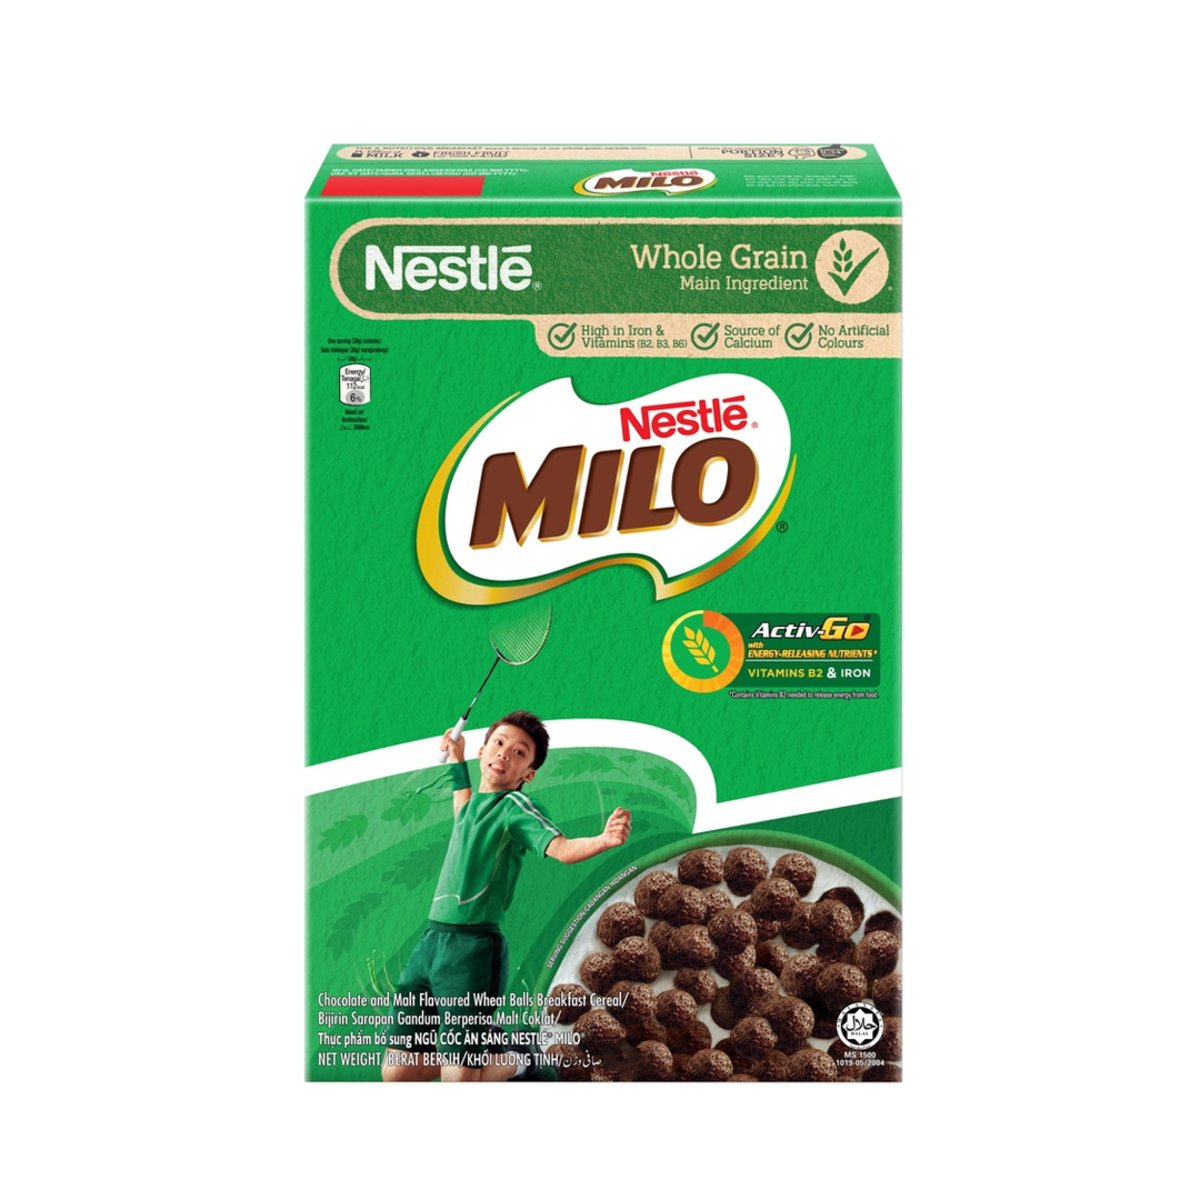 Milo Sereal 300g